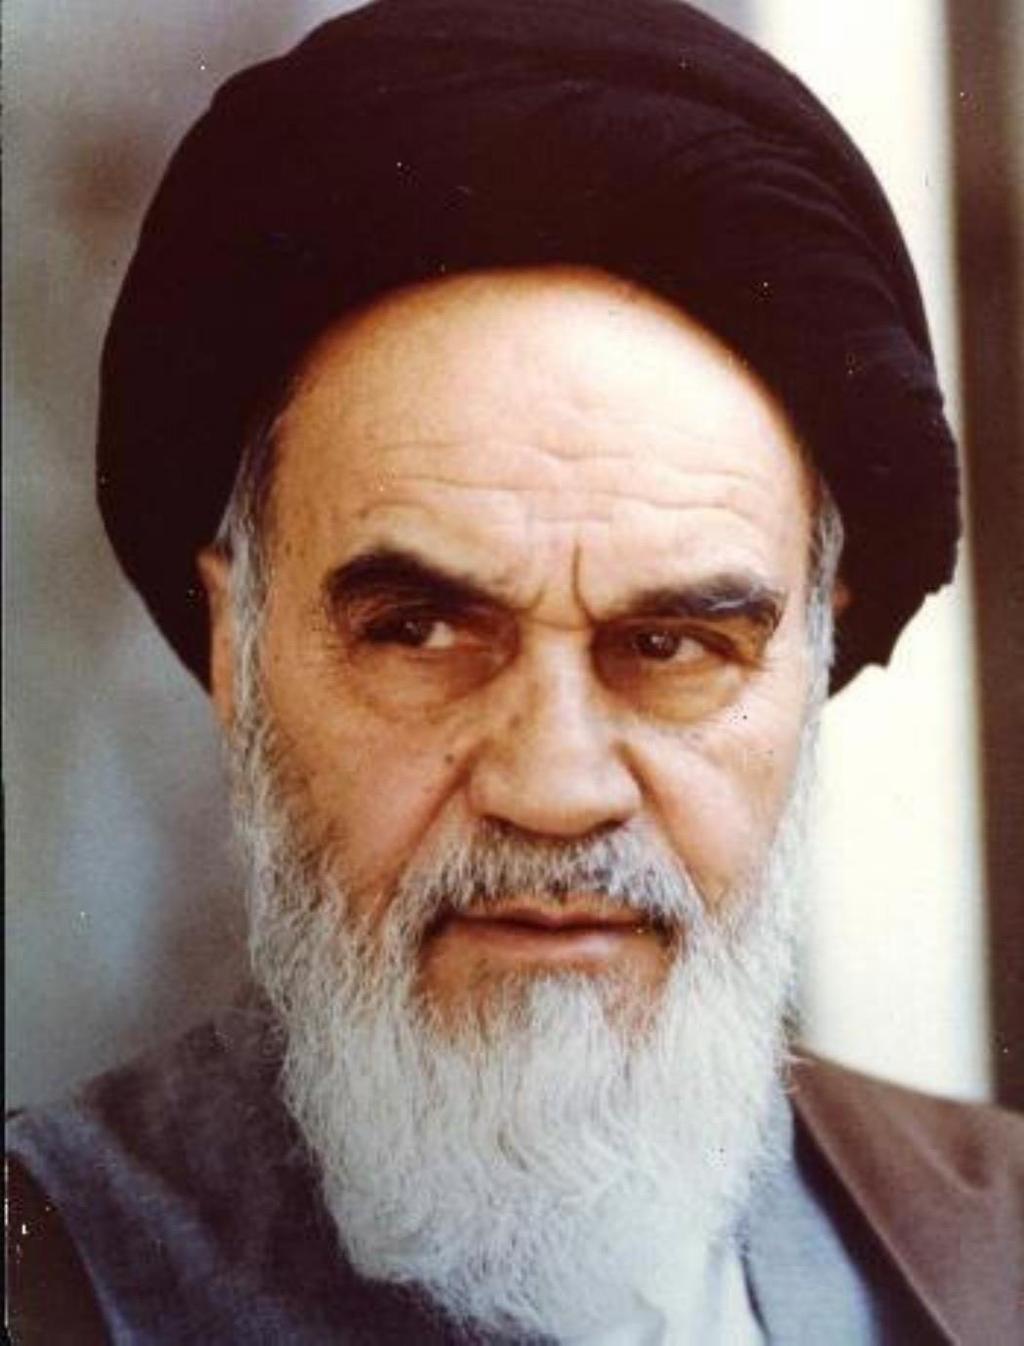 Ayatollah